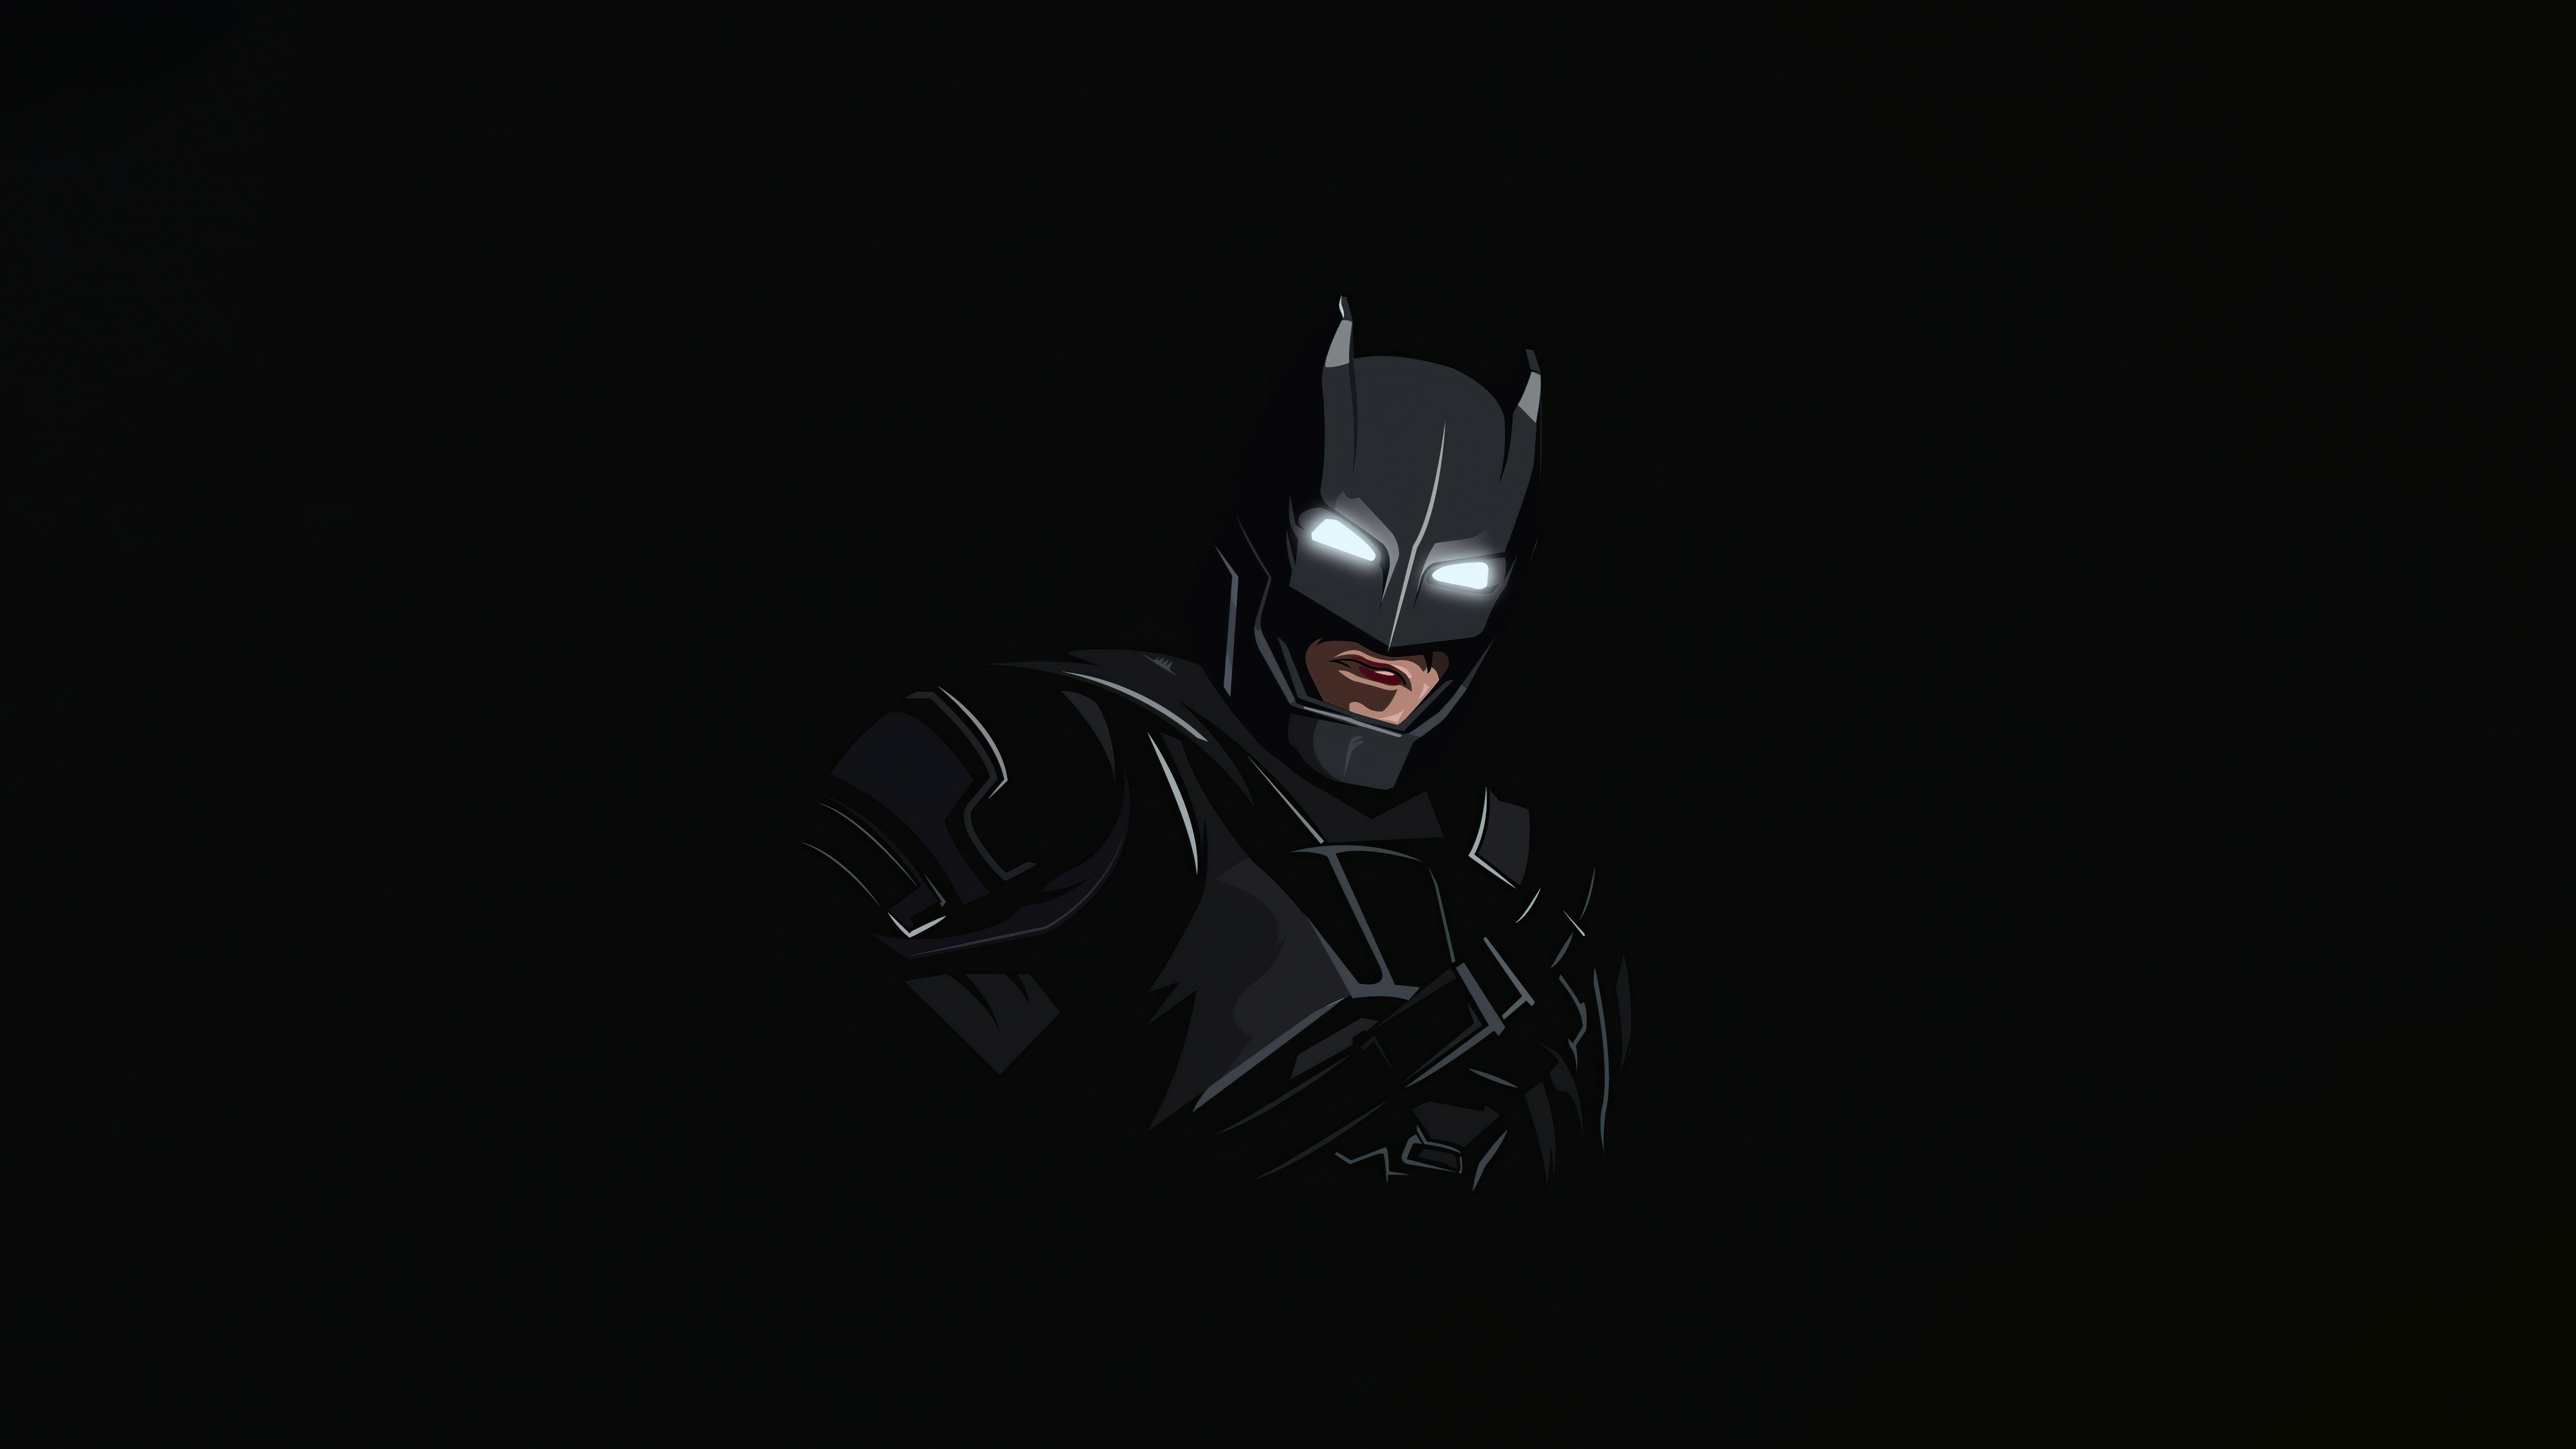 7680x4320 Resolution Batman with Vignette 8K Wallpaper - Wallpapers Den